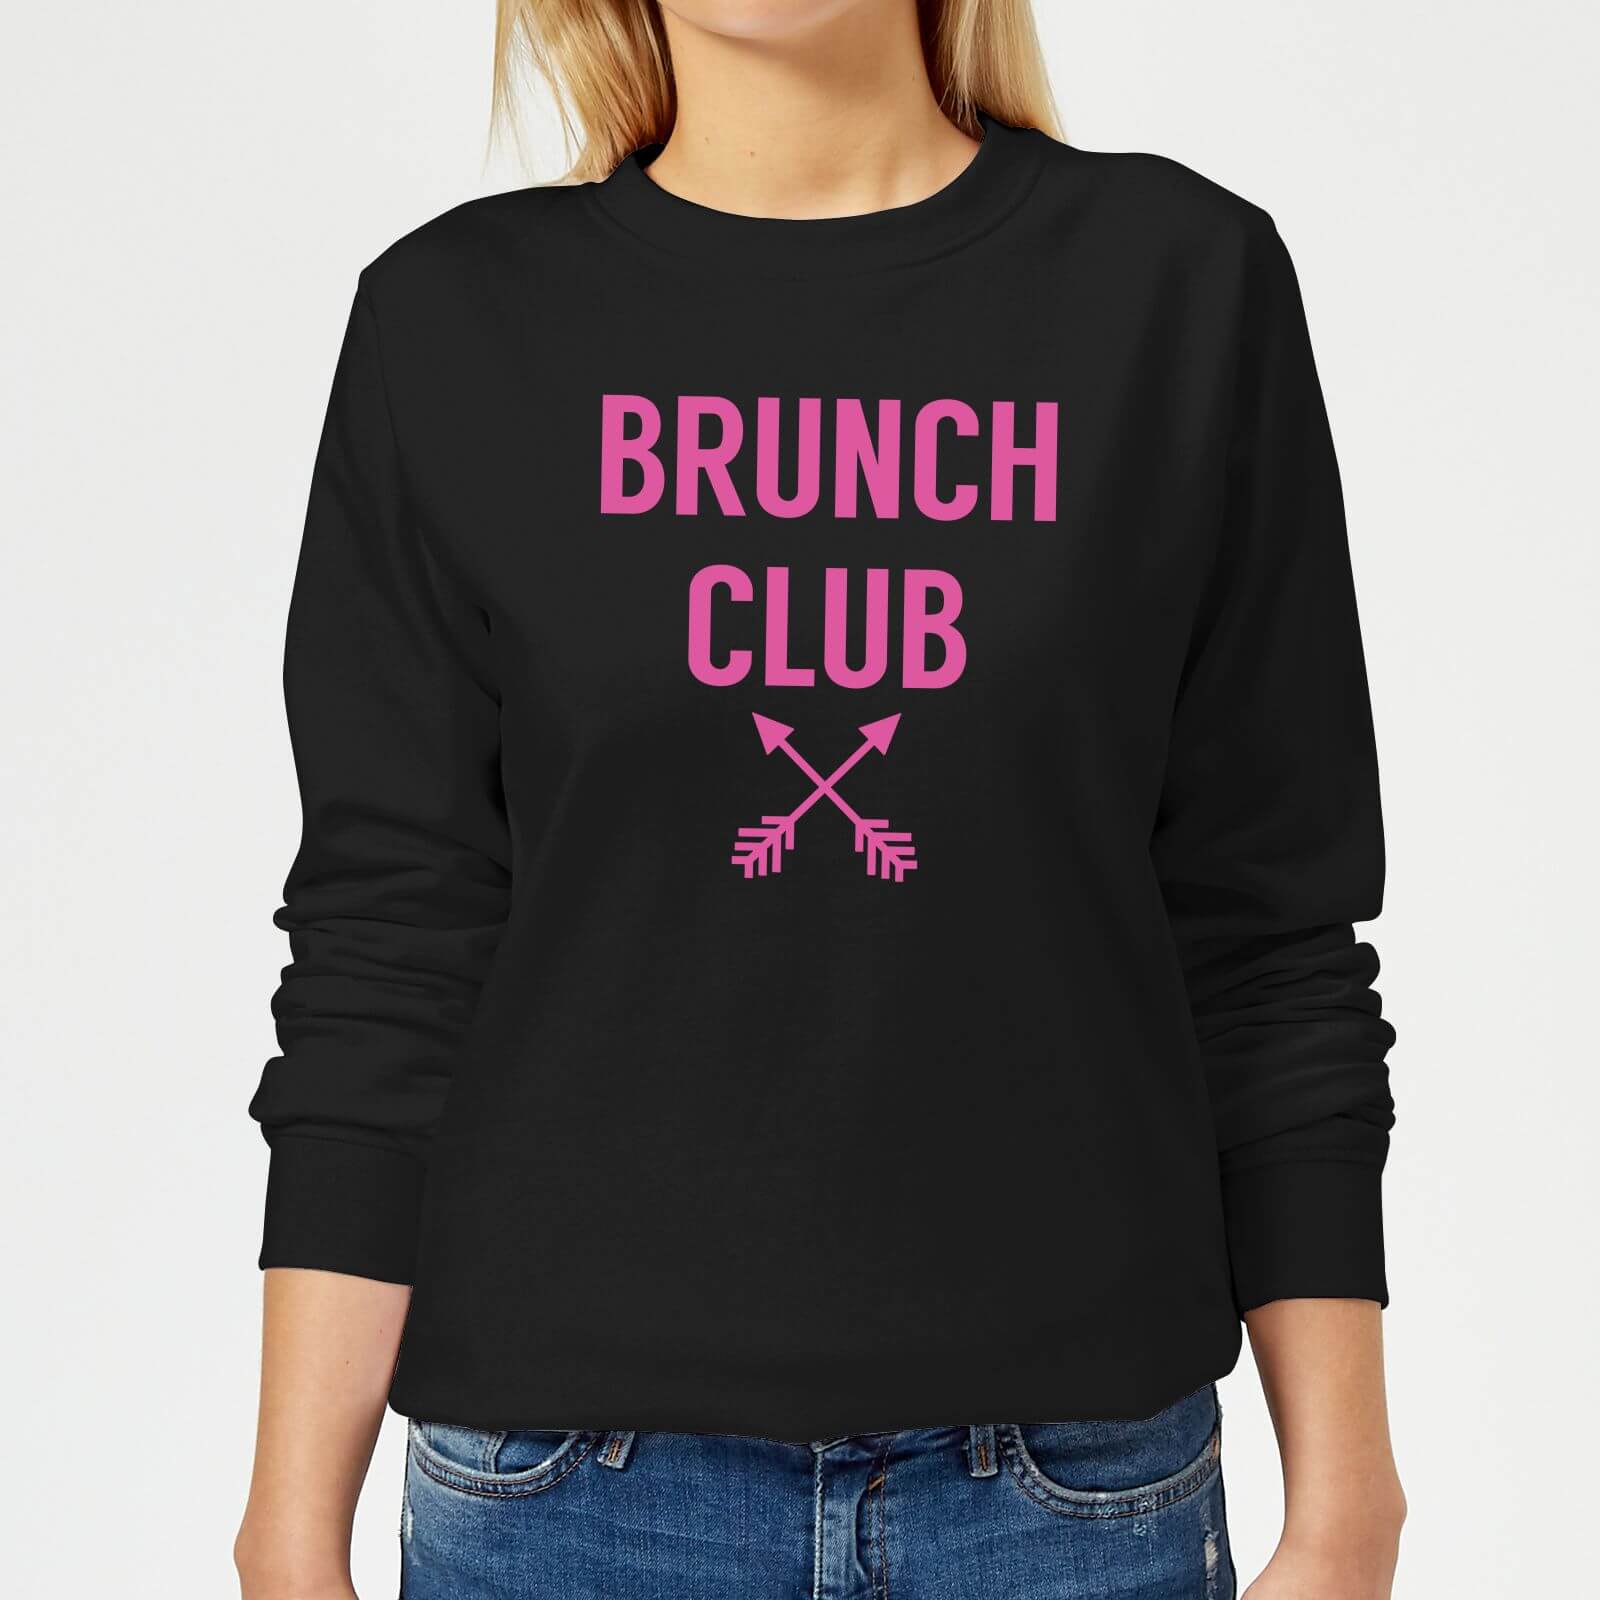 Brunch Club Women's Sweatshirt - Black - 5XL - Black